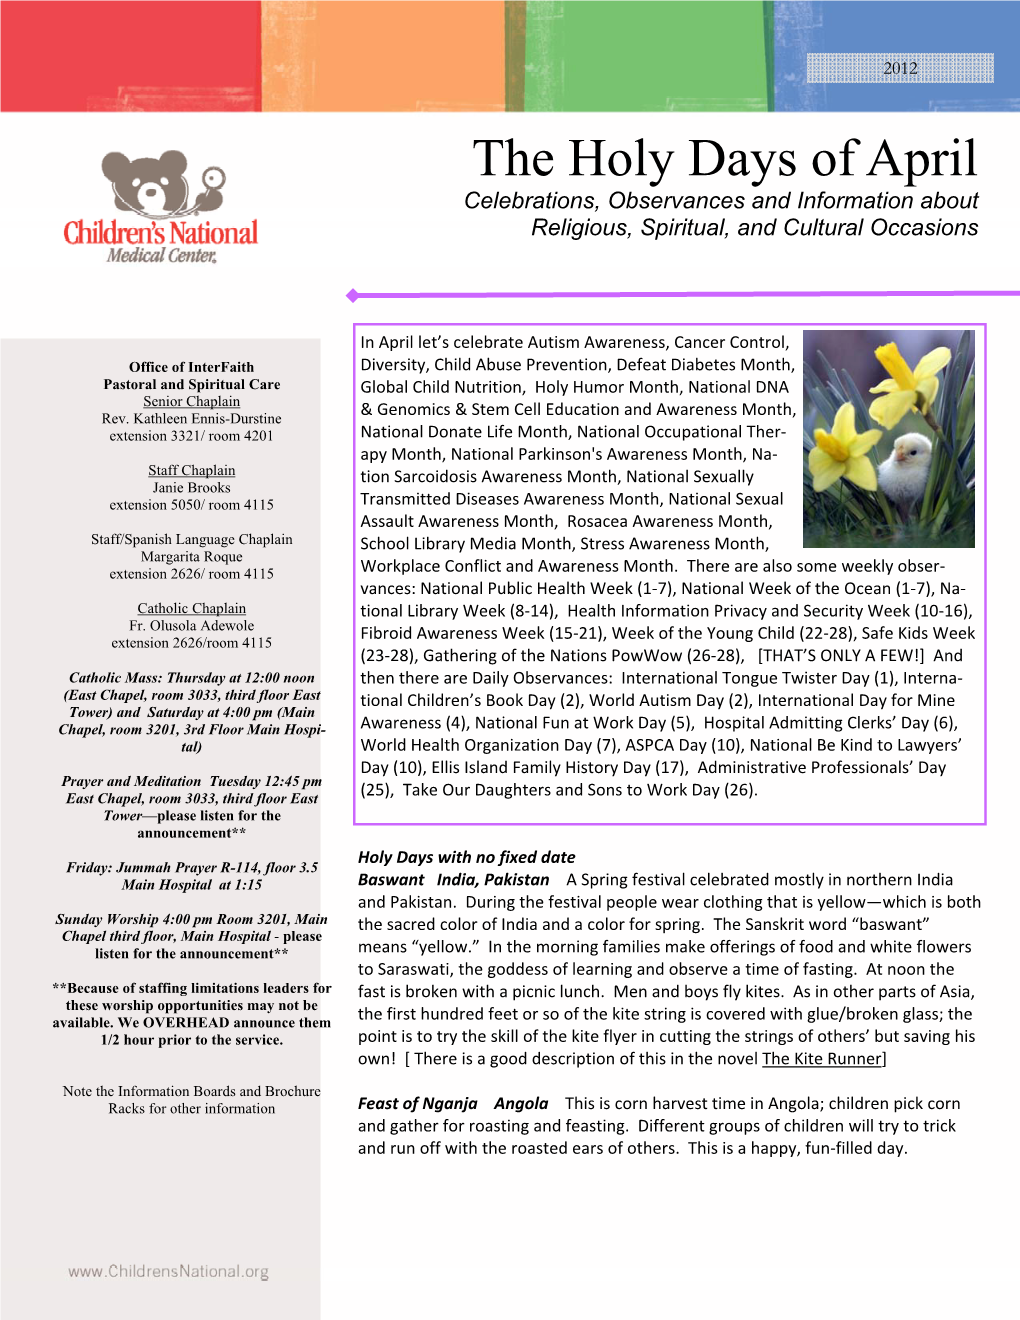 Holy Days, Celebrations, and Observances April 2012 A.Pub